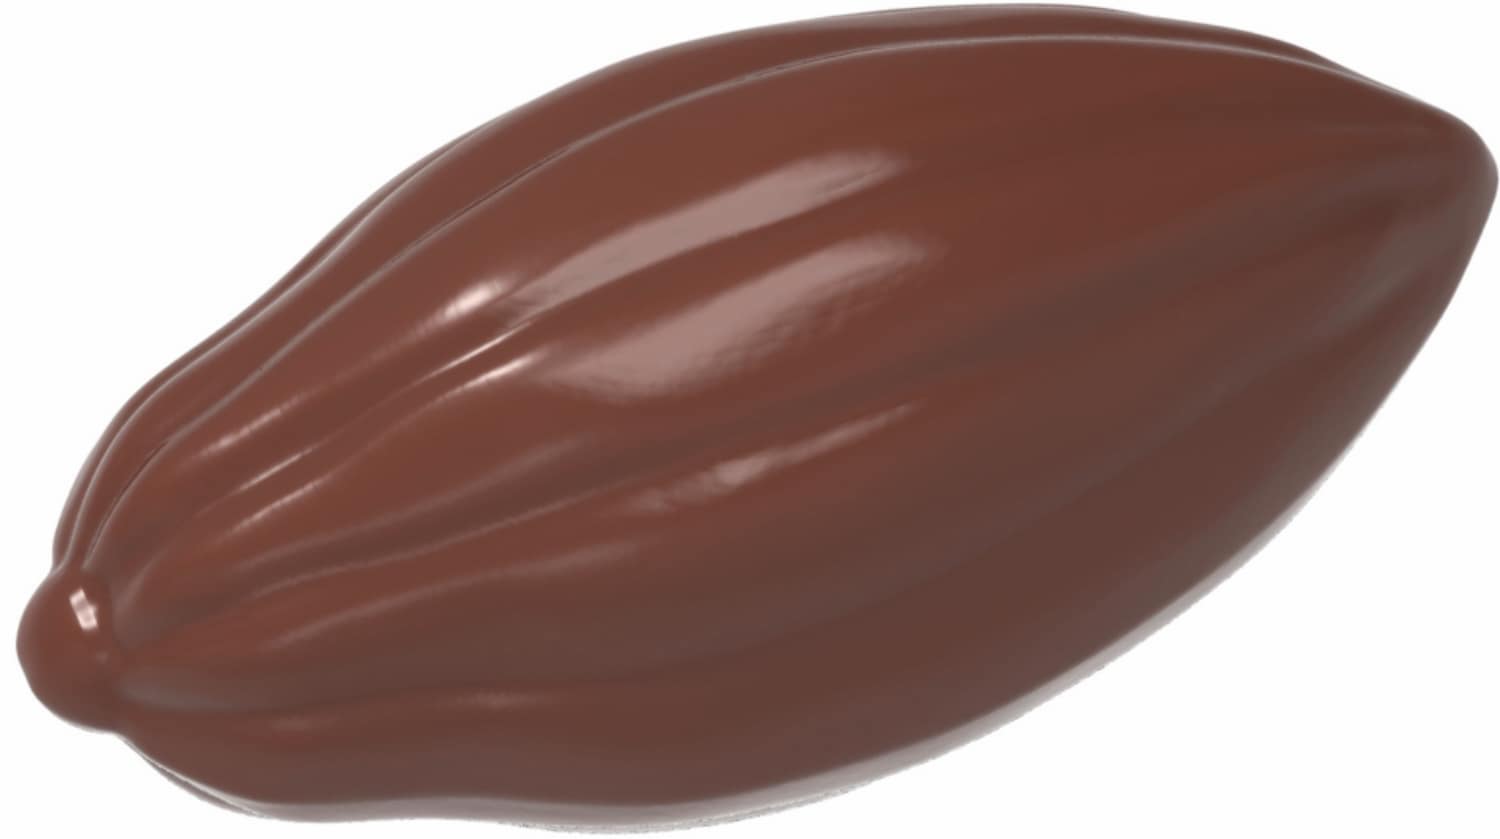 Chocolate mould "Cocoa bean" 421919